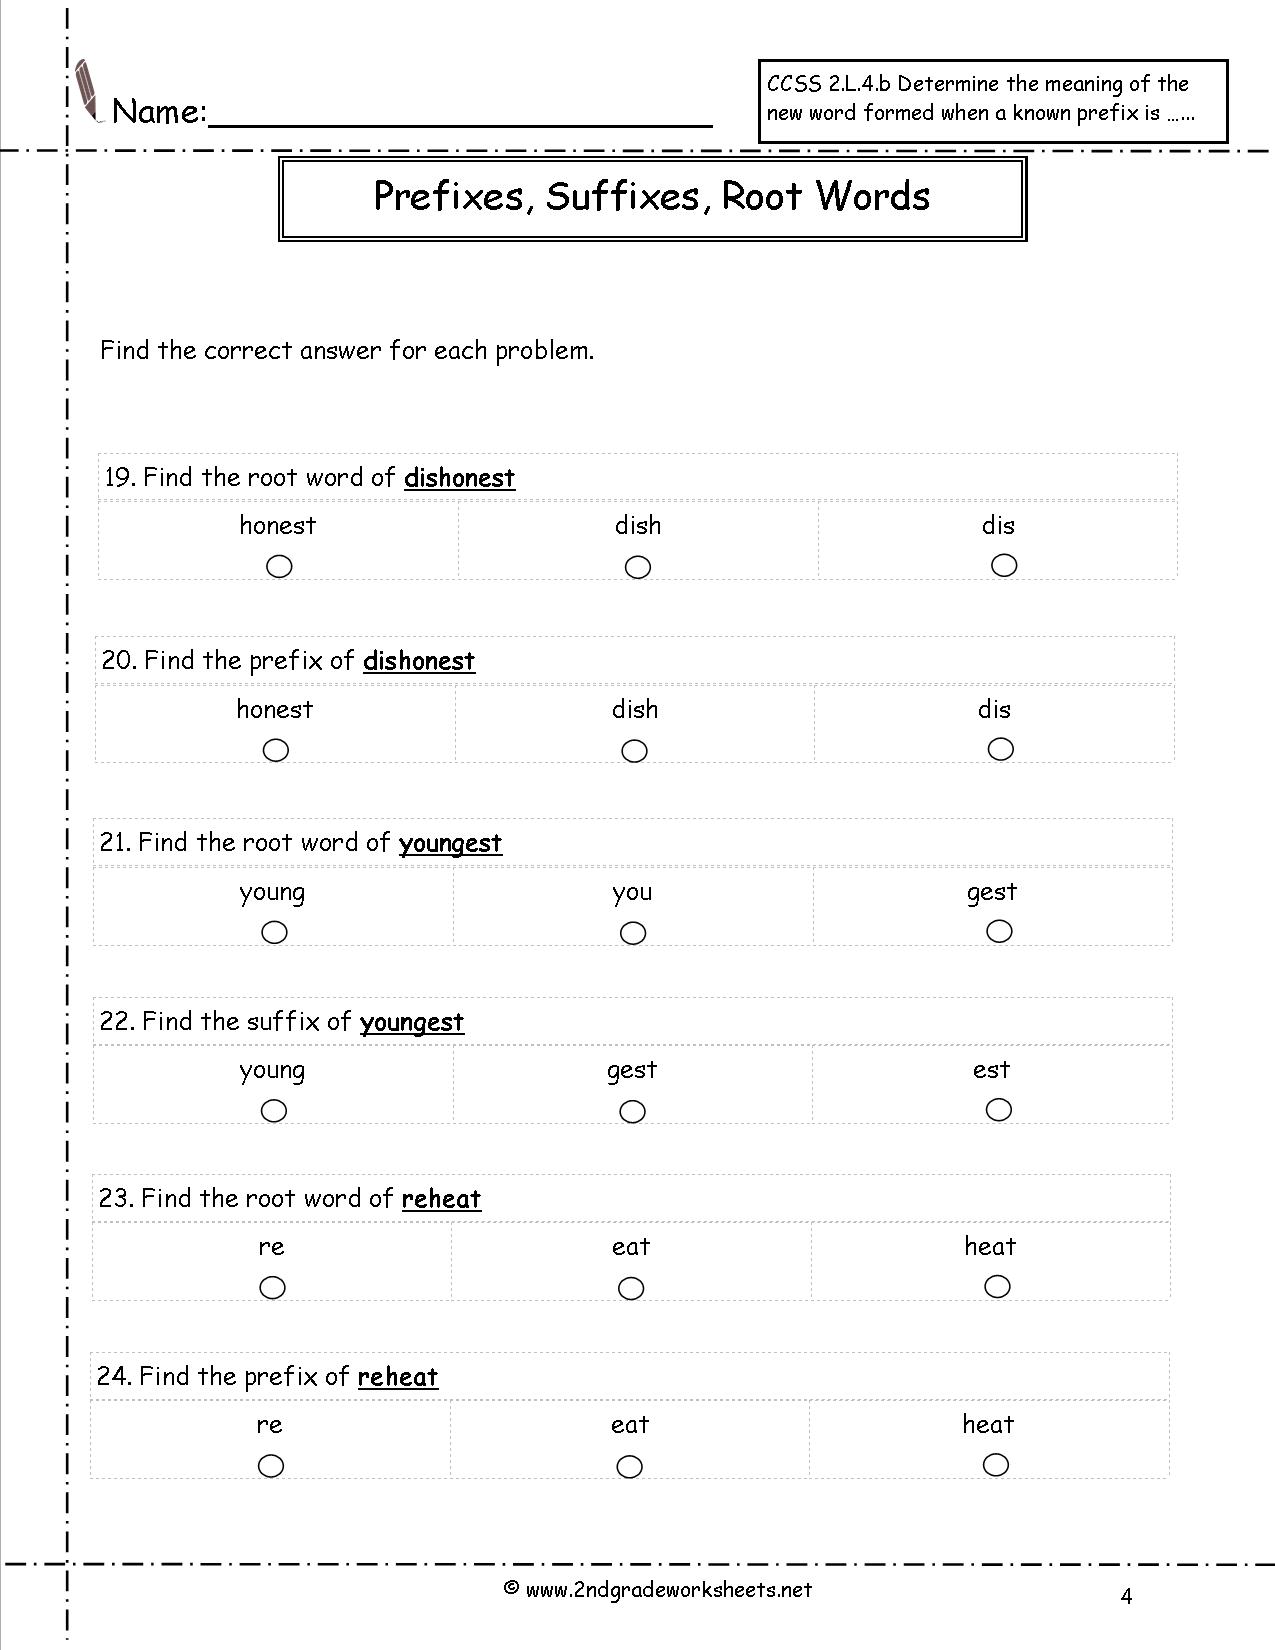 ROOT-WORDS Prefixes Suffixes Worksheets Image